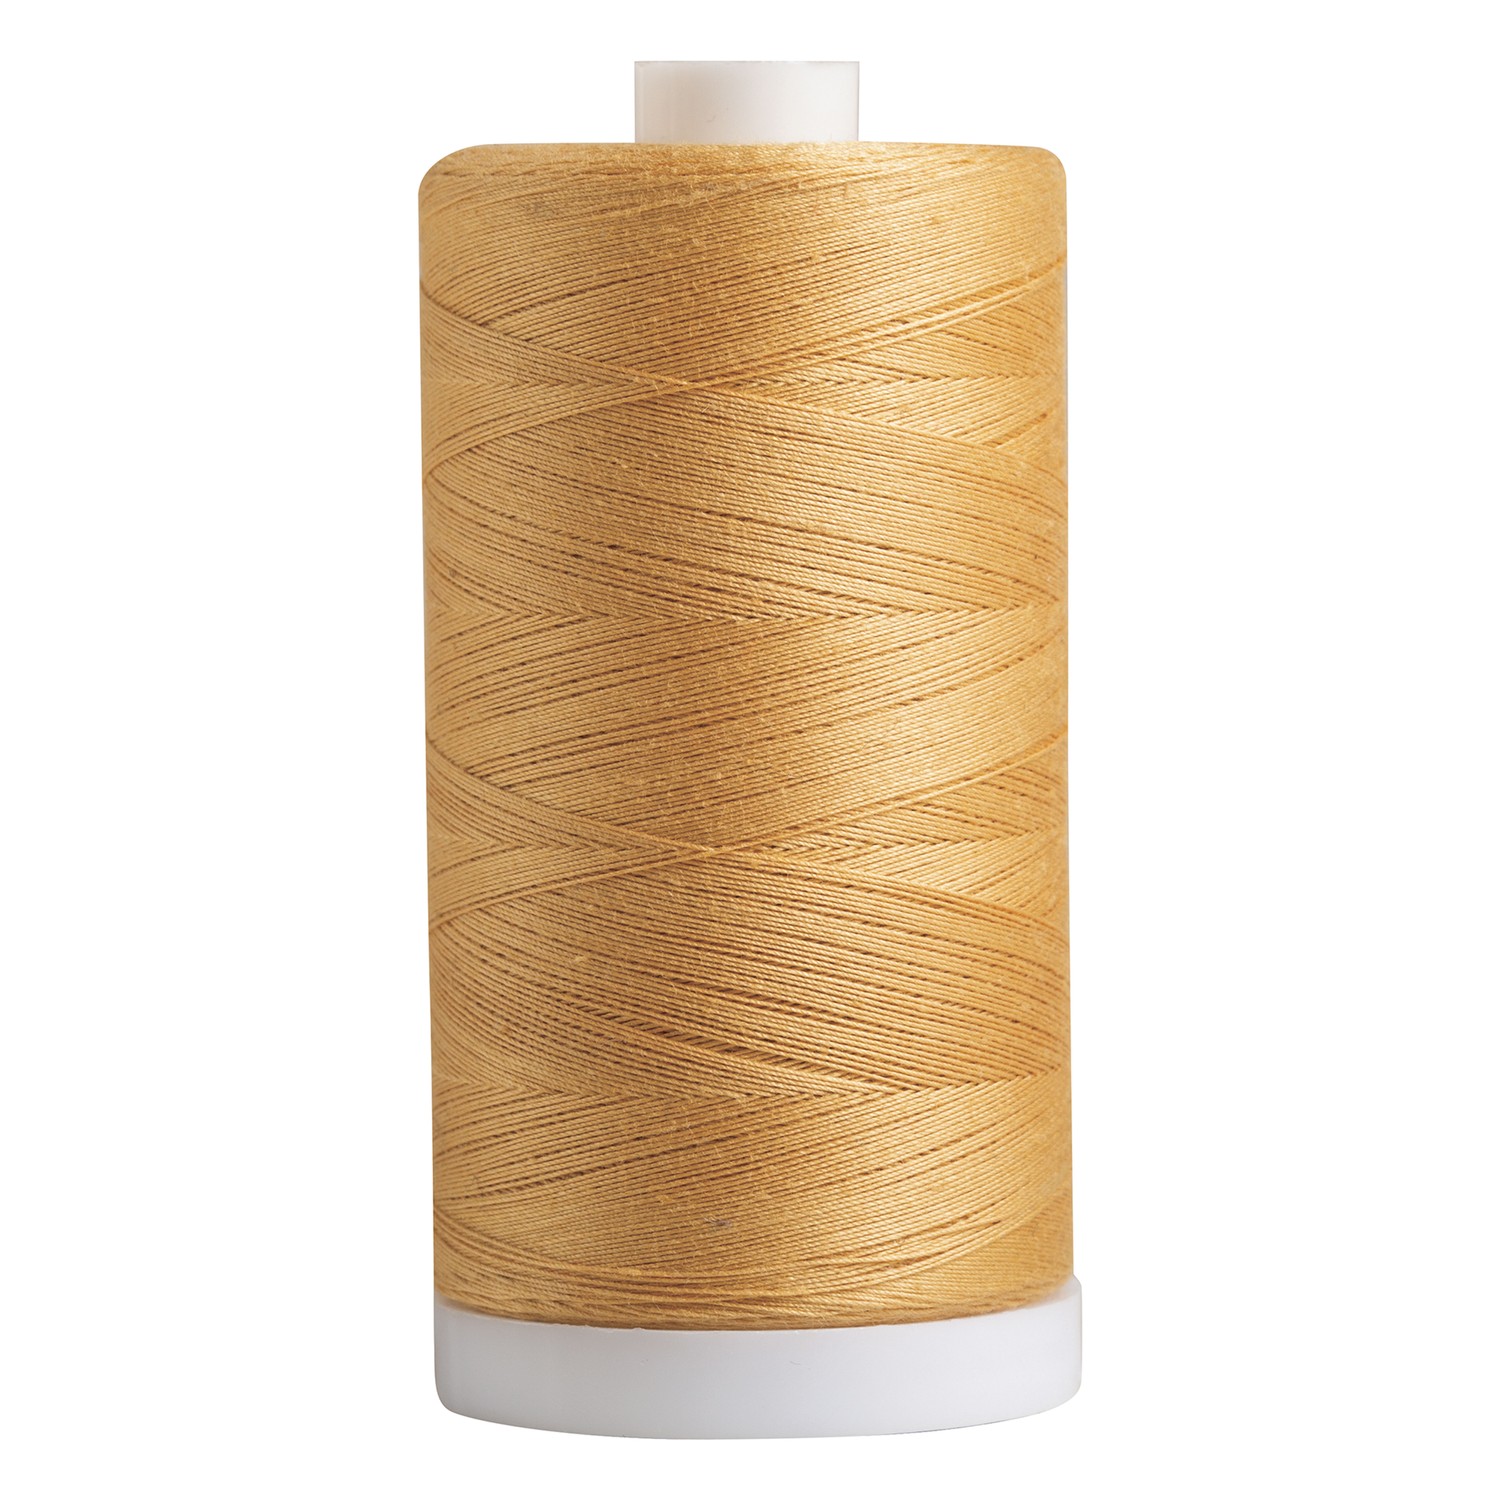 Connecting Threads 100% Cotton Thread Sets - 1200 Yard Spools (Set of 5 -  Salt & Pepper)